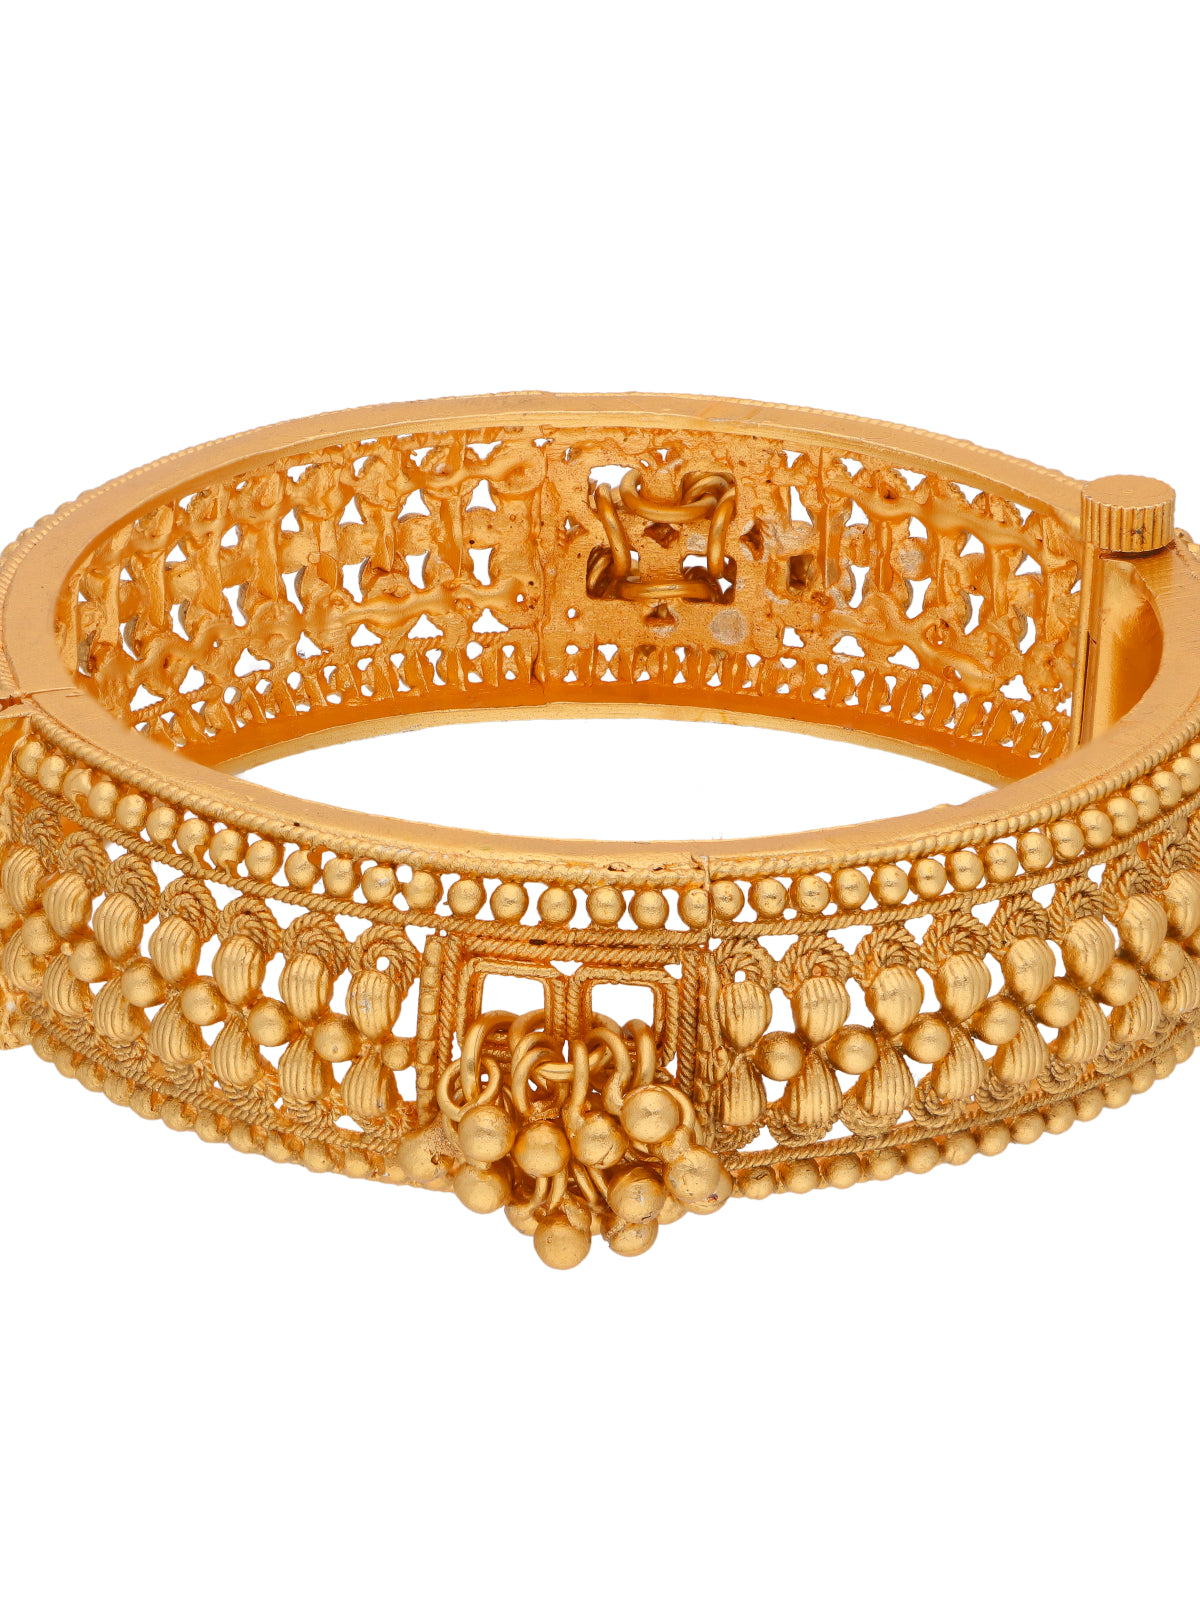 Indian Ghungroo Bangle Arm BraceletDefault | Arm bracelets, Arm bangles, Bangles  jewelry designs